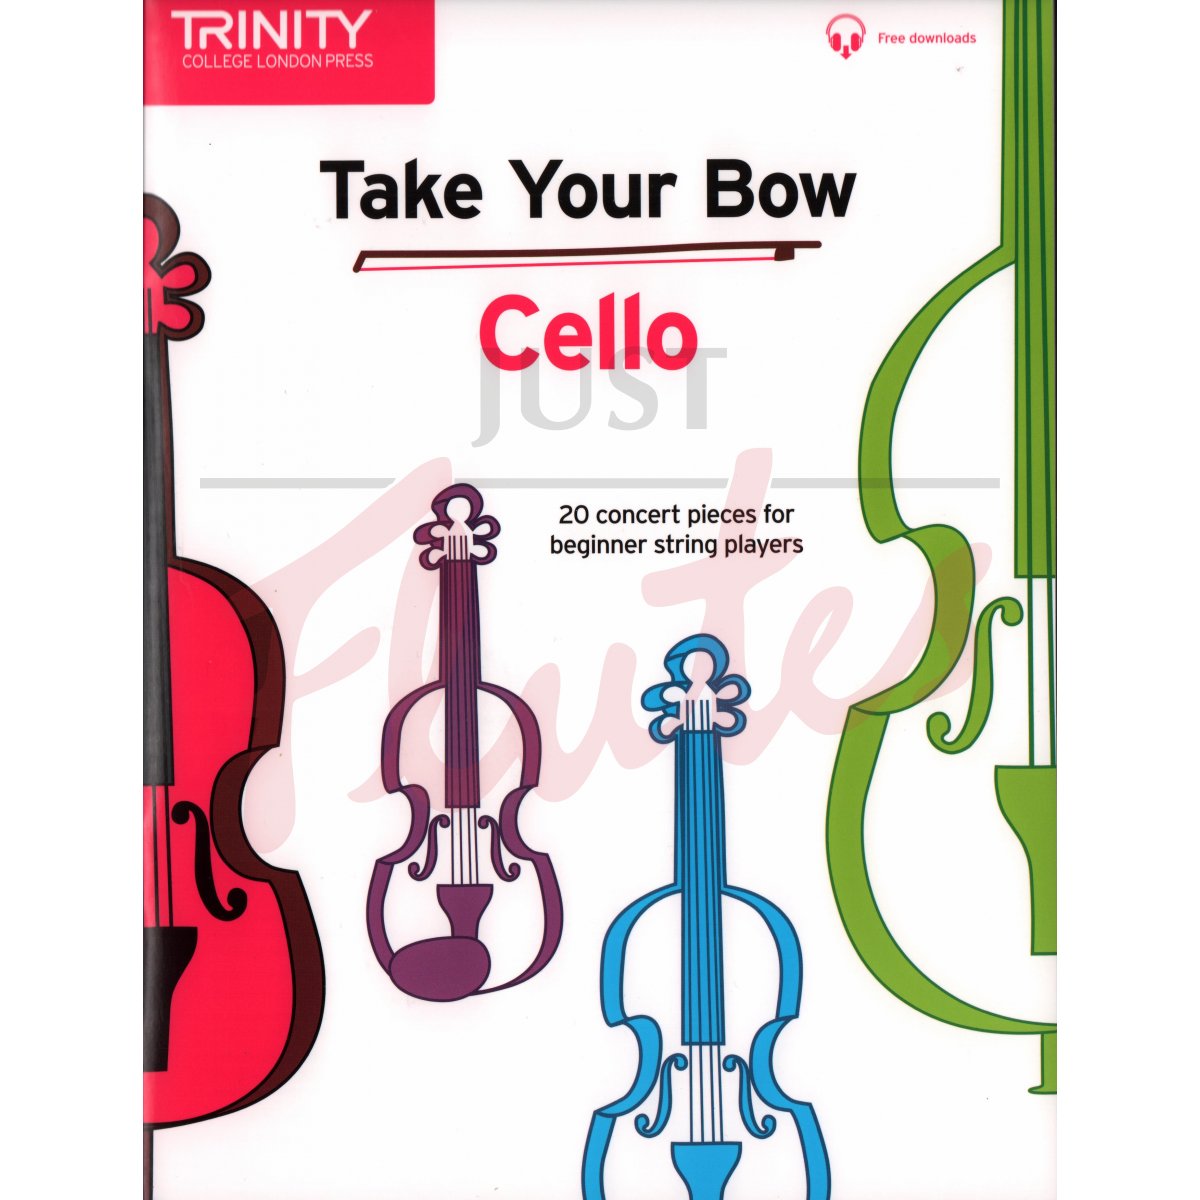 Take Your Bow - Cello